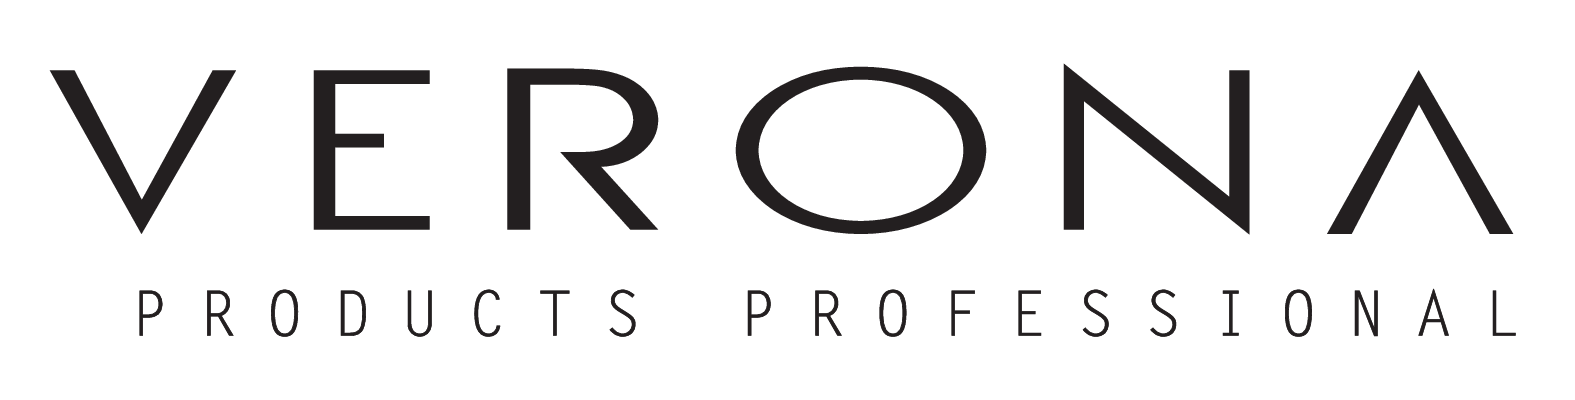 Verona Products Professional